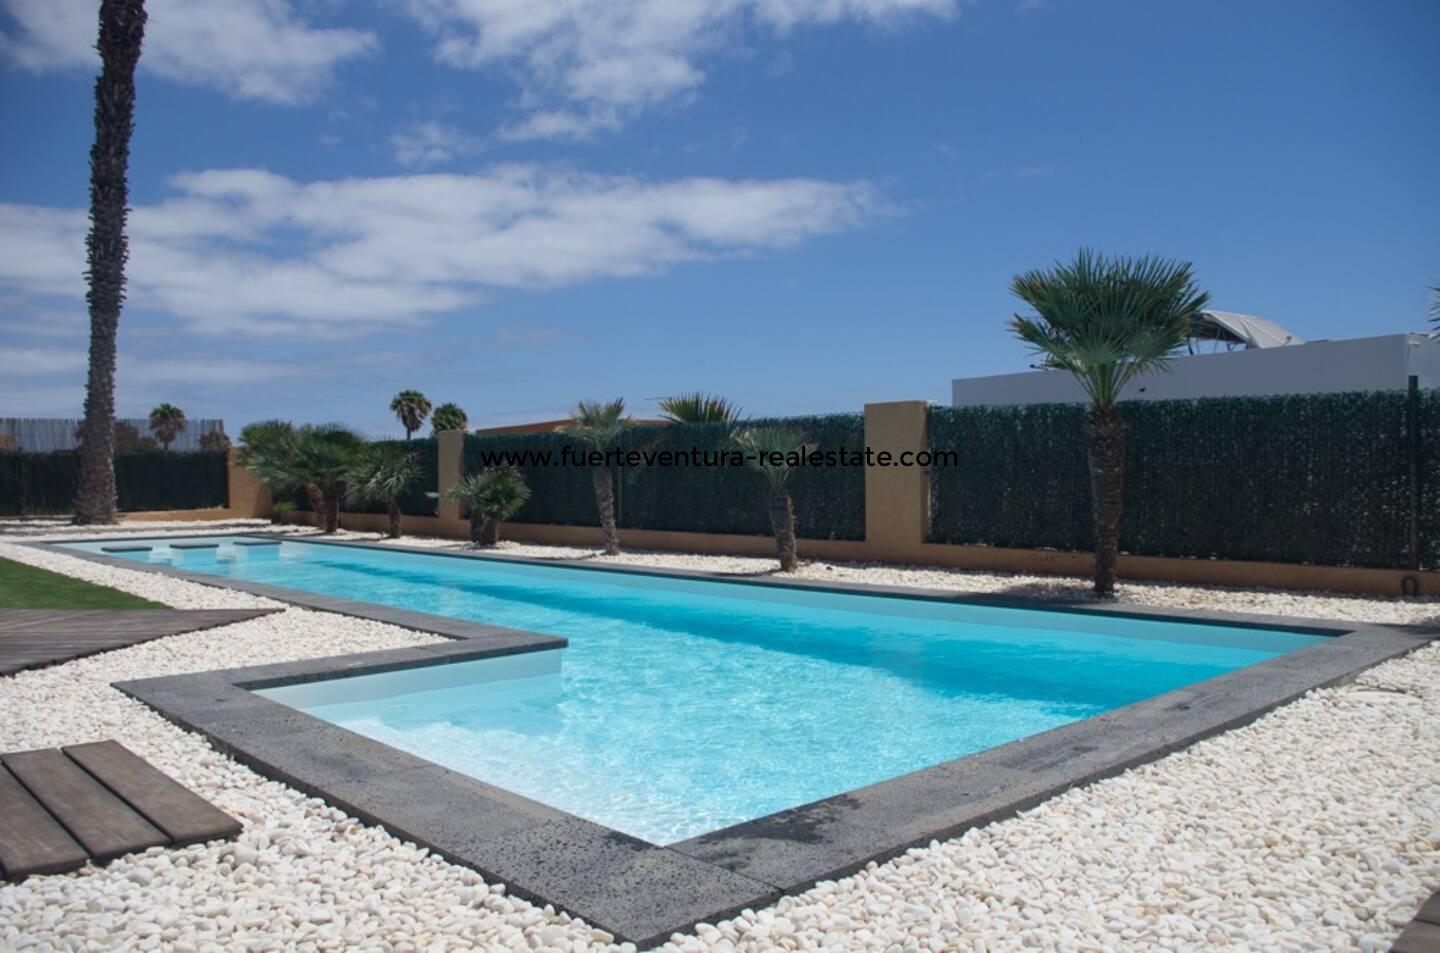  Unieke villa met zwembad op de Golf Las Salinas in Caleta de Fuste